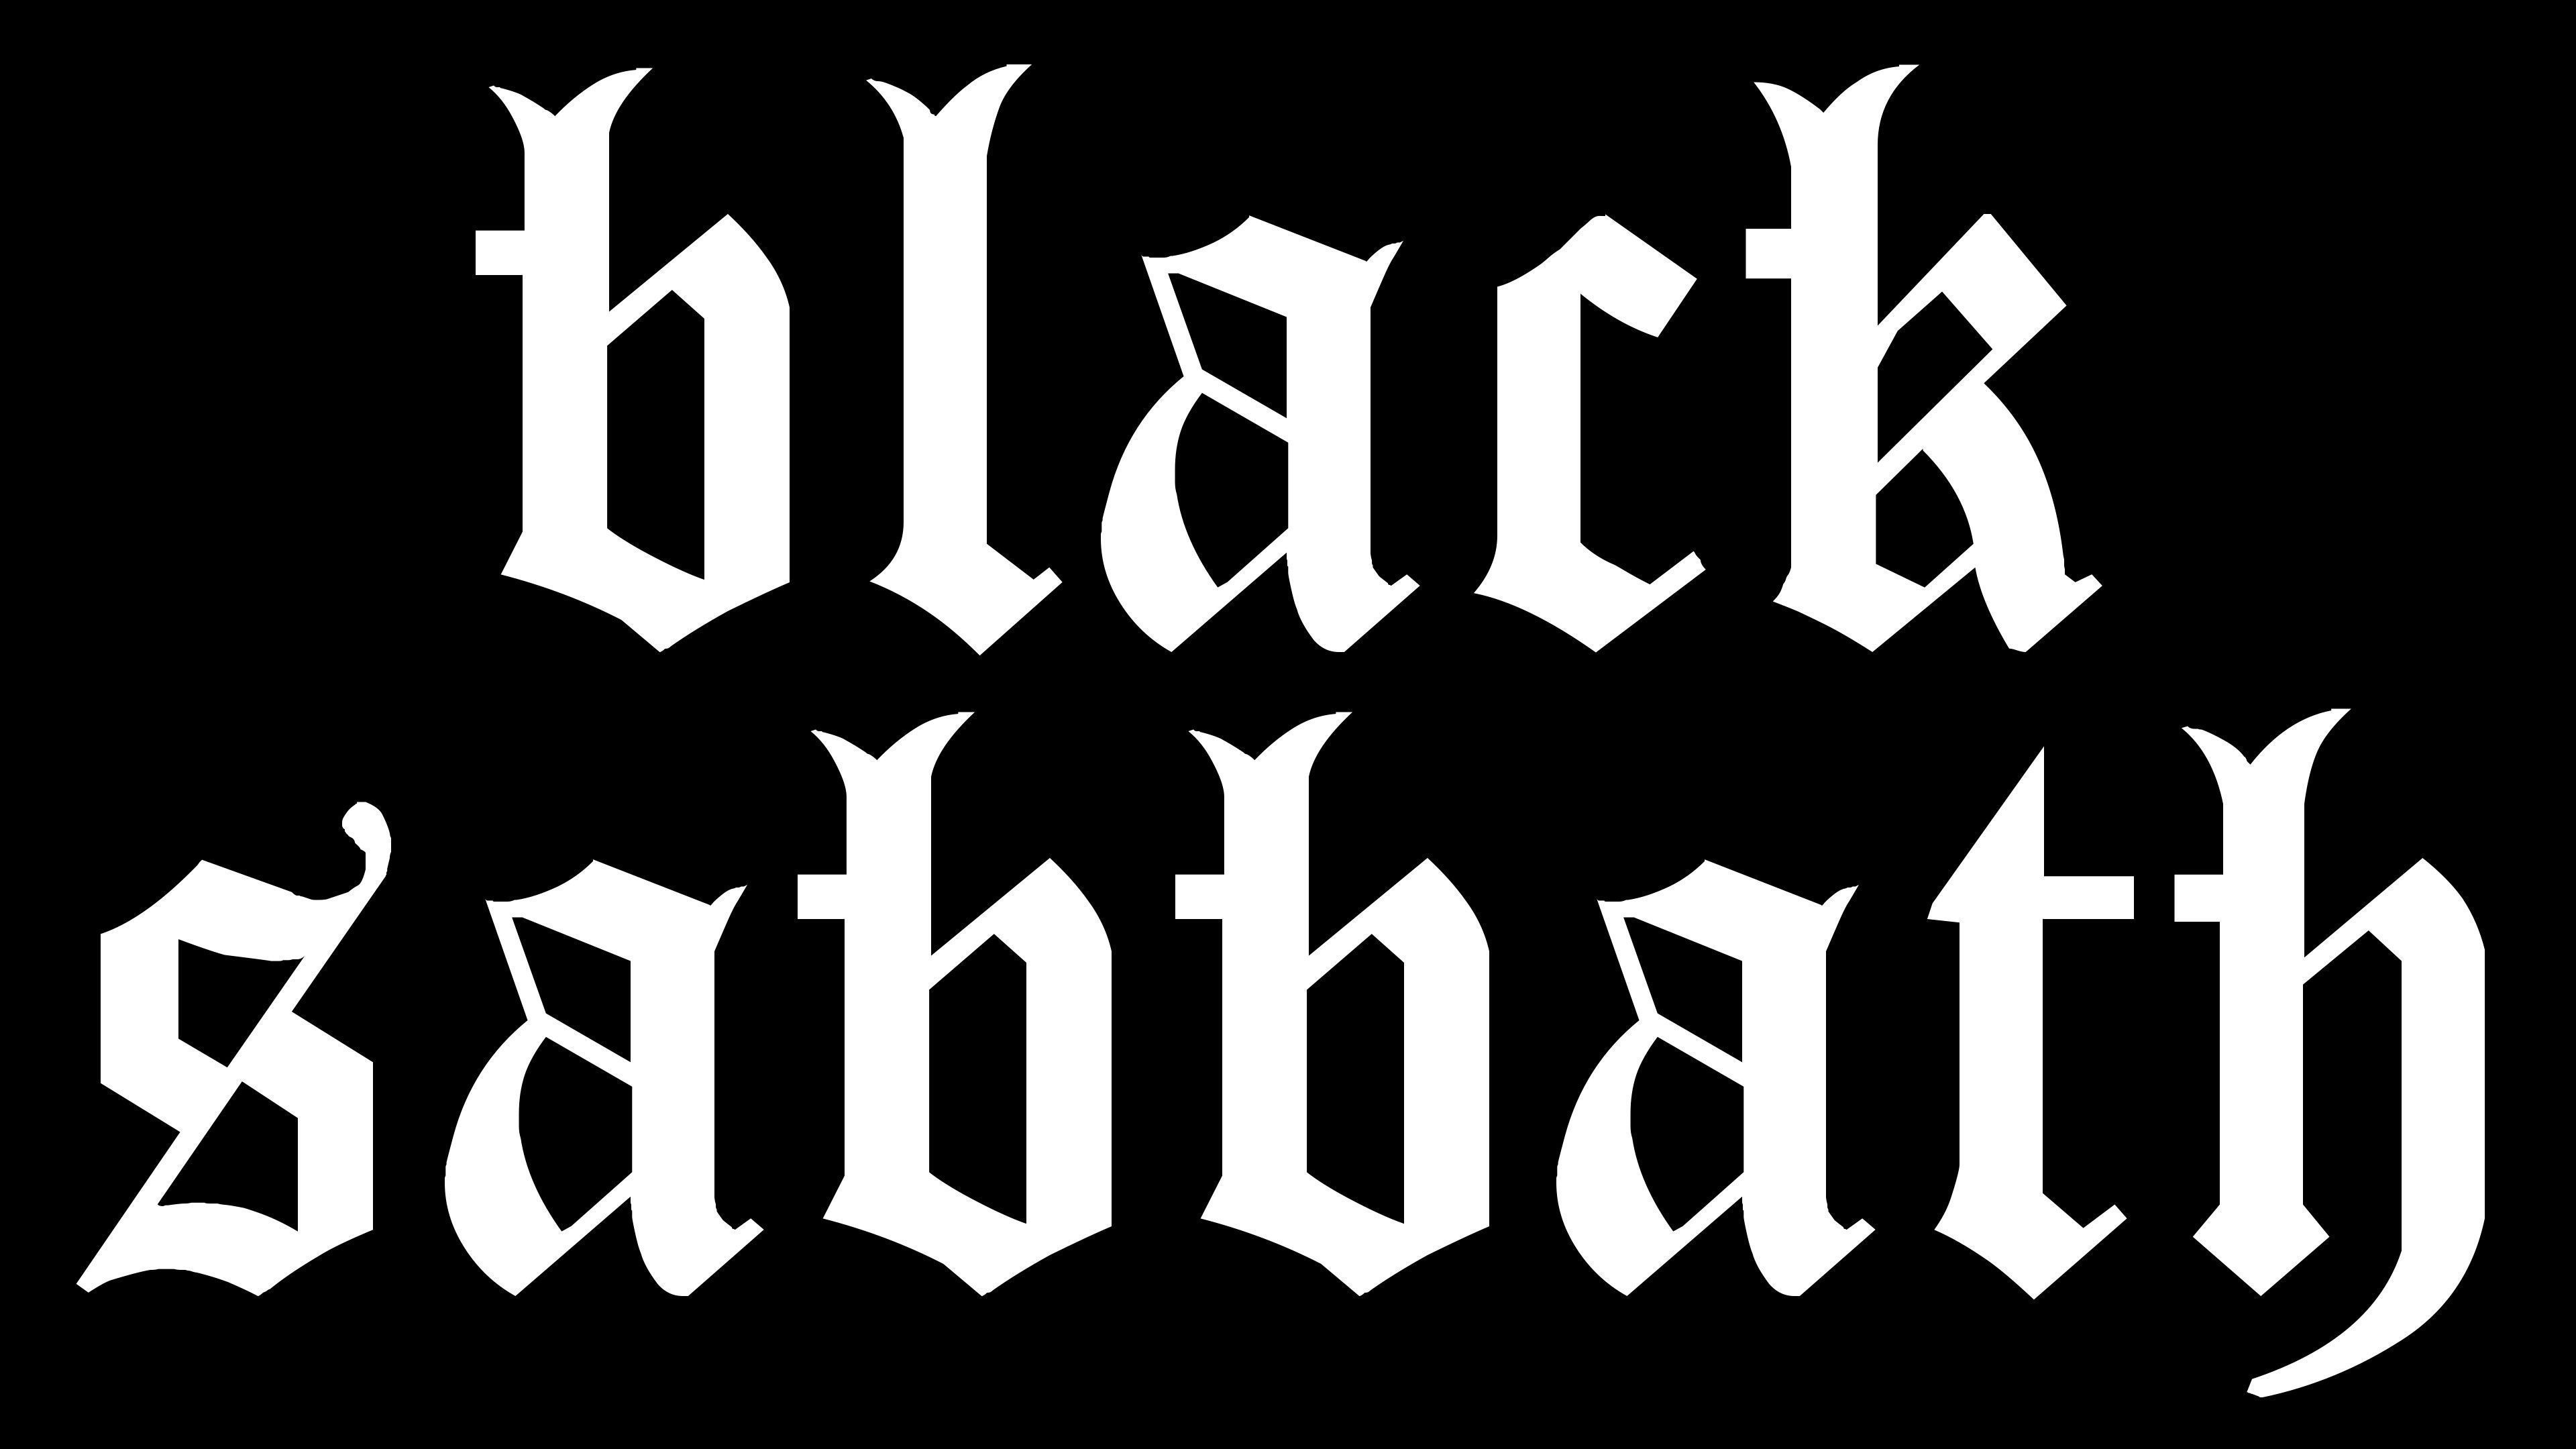 black sabbath logo black sabbath cross logo